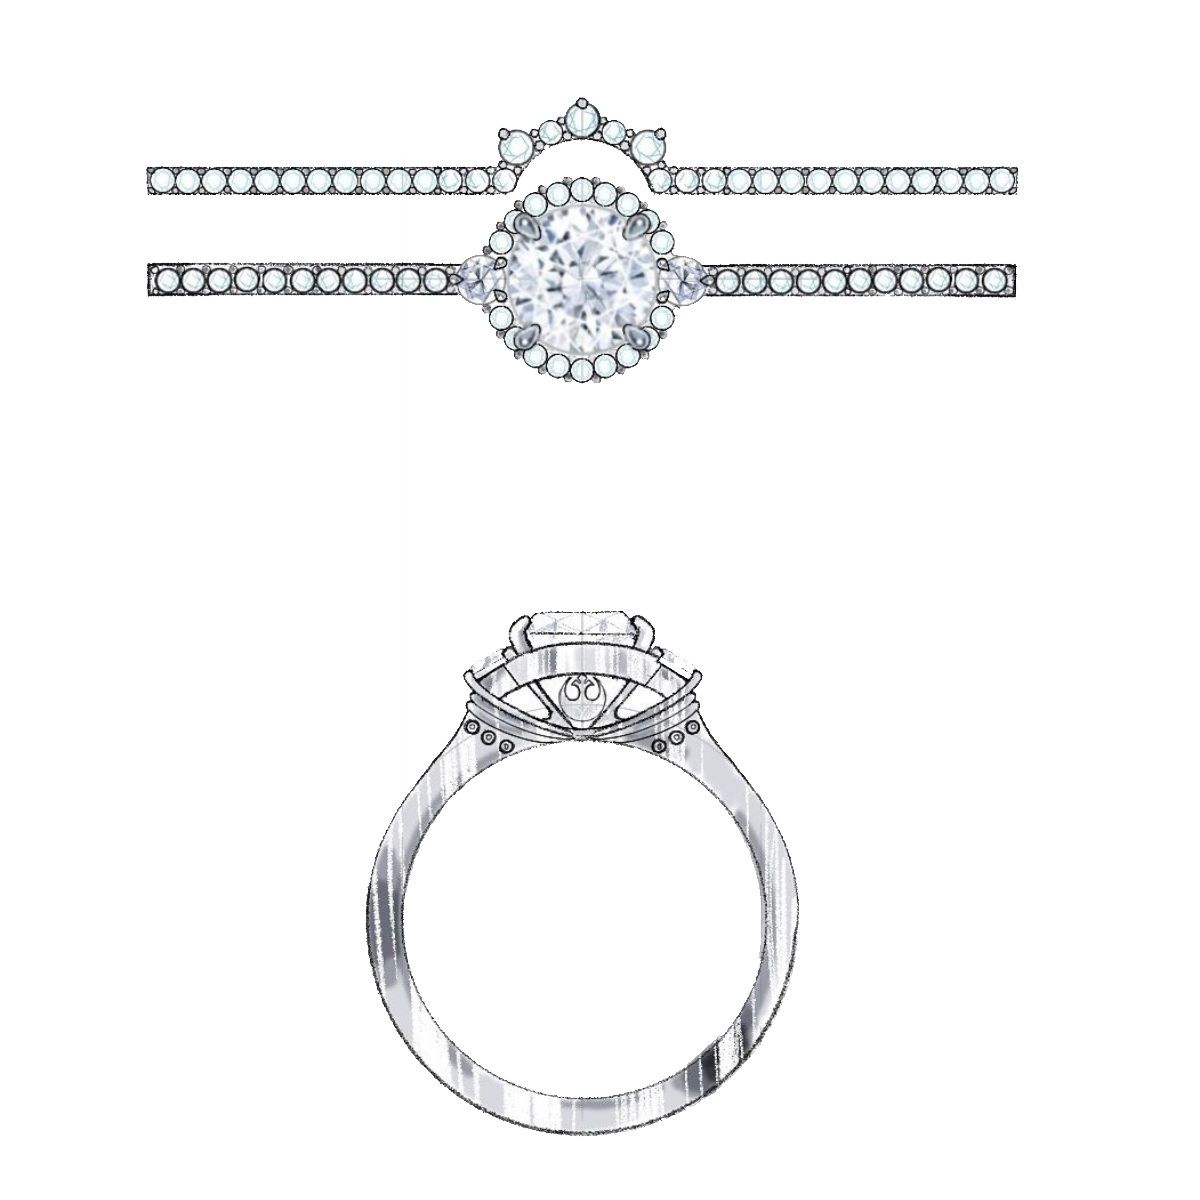 Star Wars inspired engagement ring designs | CustomMade.com